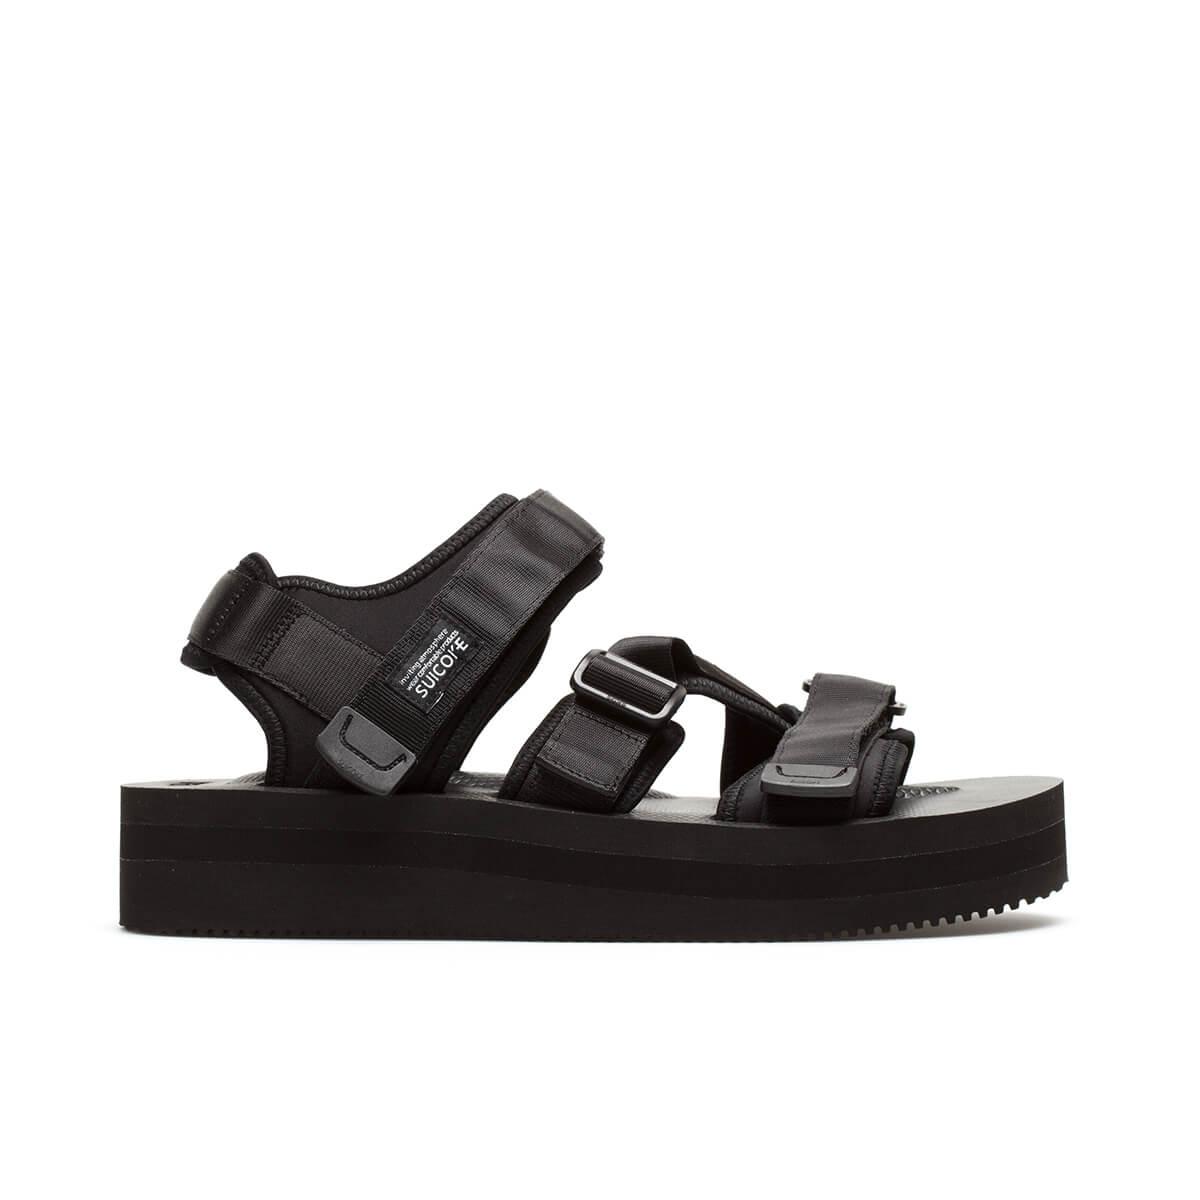 Suicoke Neoprene Kisee-v Sandals in Black for Men - Save 38% - Lyst